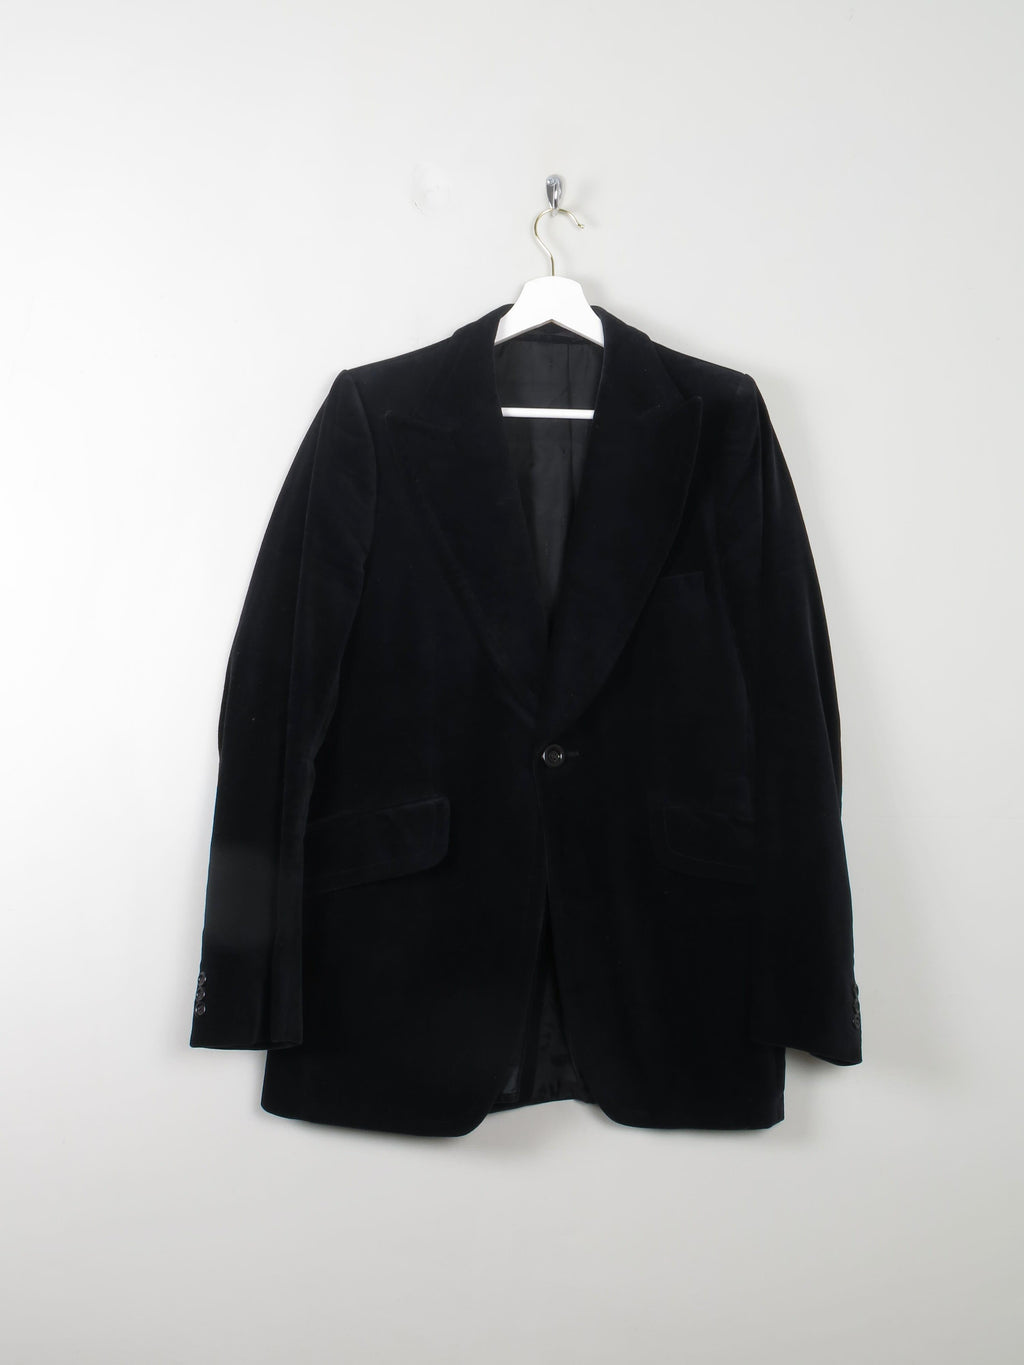 Men's Vintage Velvet jacket Black 70s S - The Harlequin